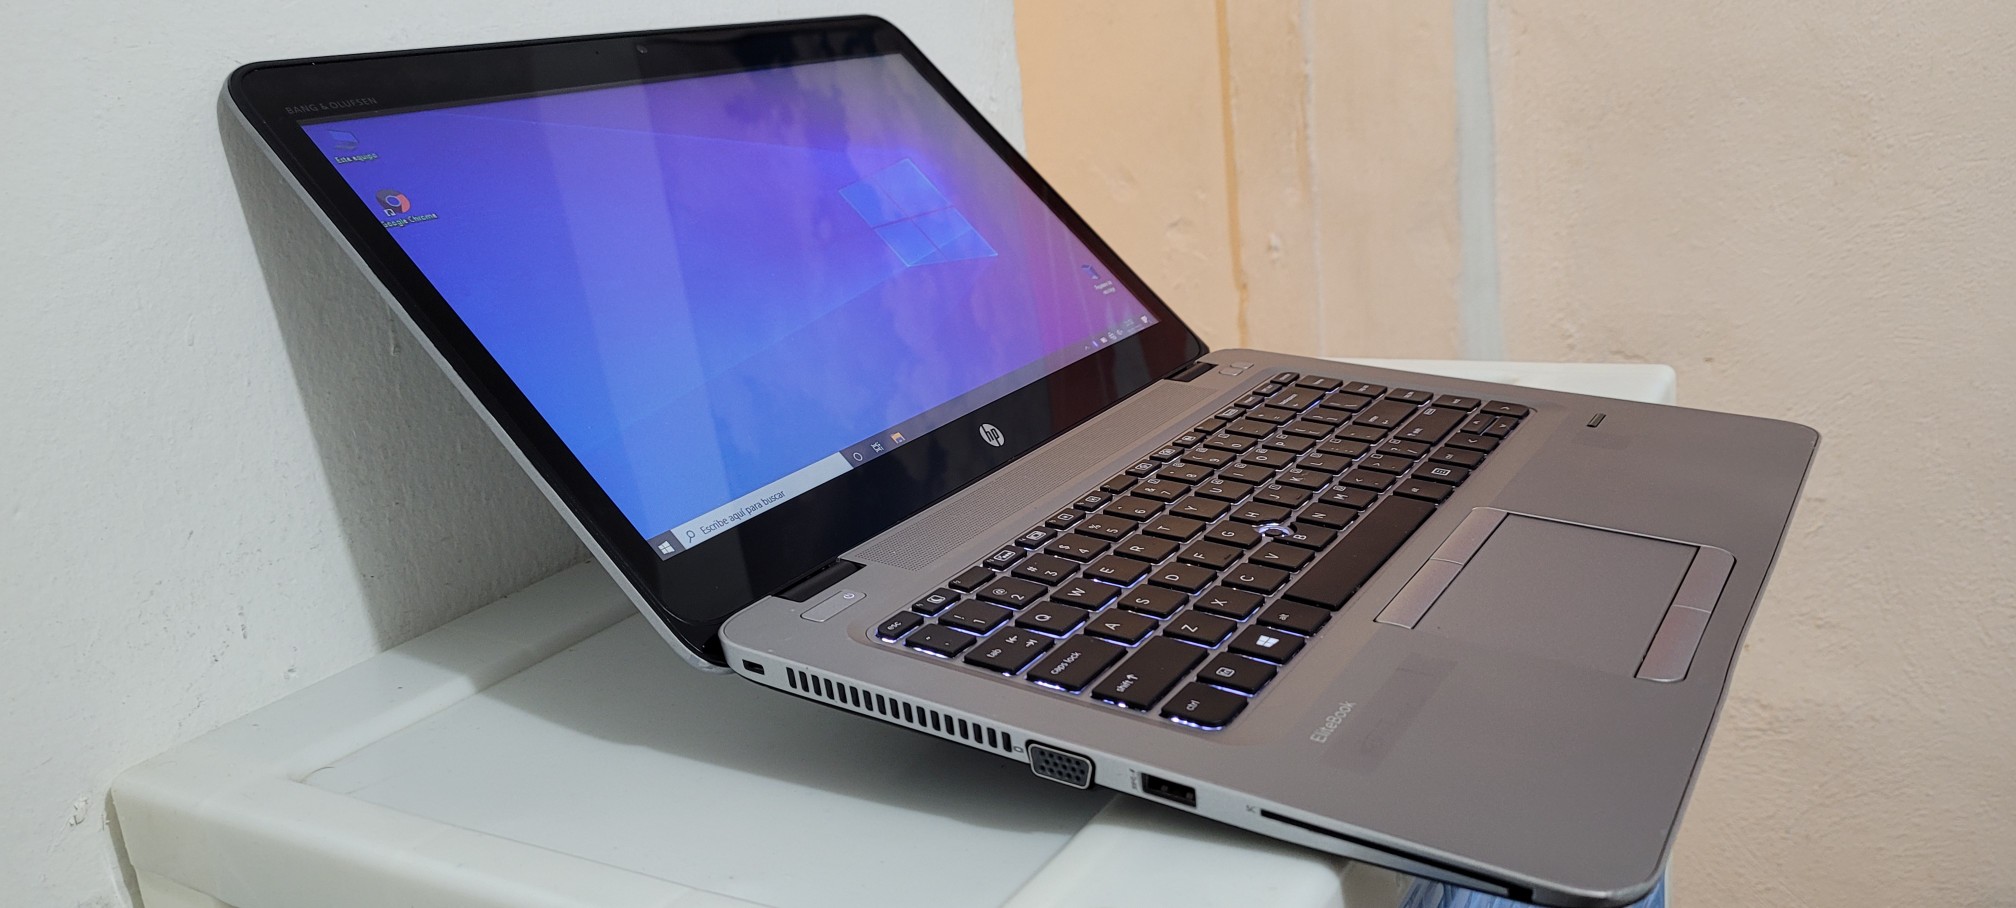 computadoras y laptops - Laptop hp Touch Core i5 7ma Ram 8gb ddr4 Disco 500gb Full 1